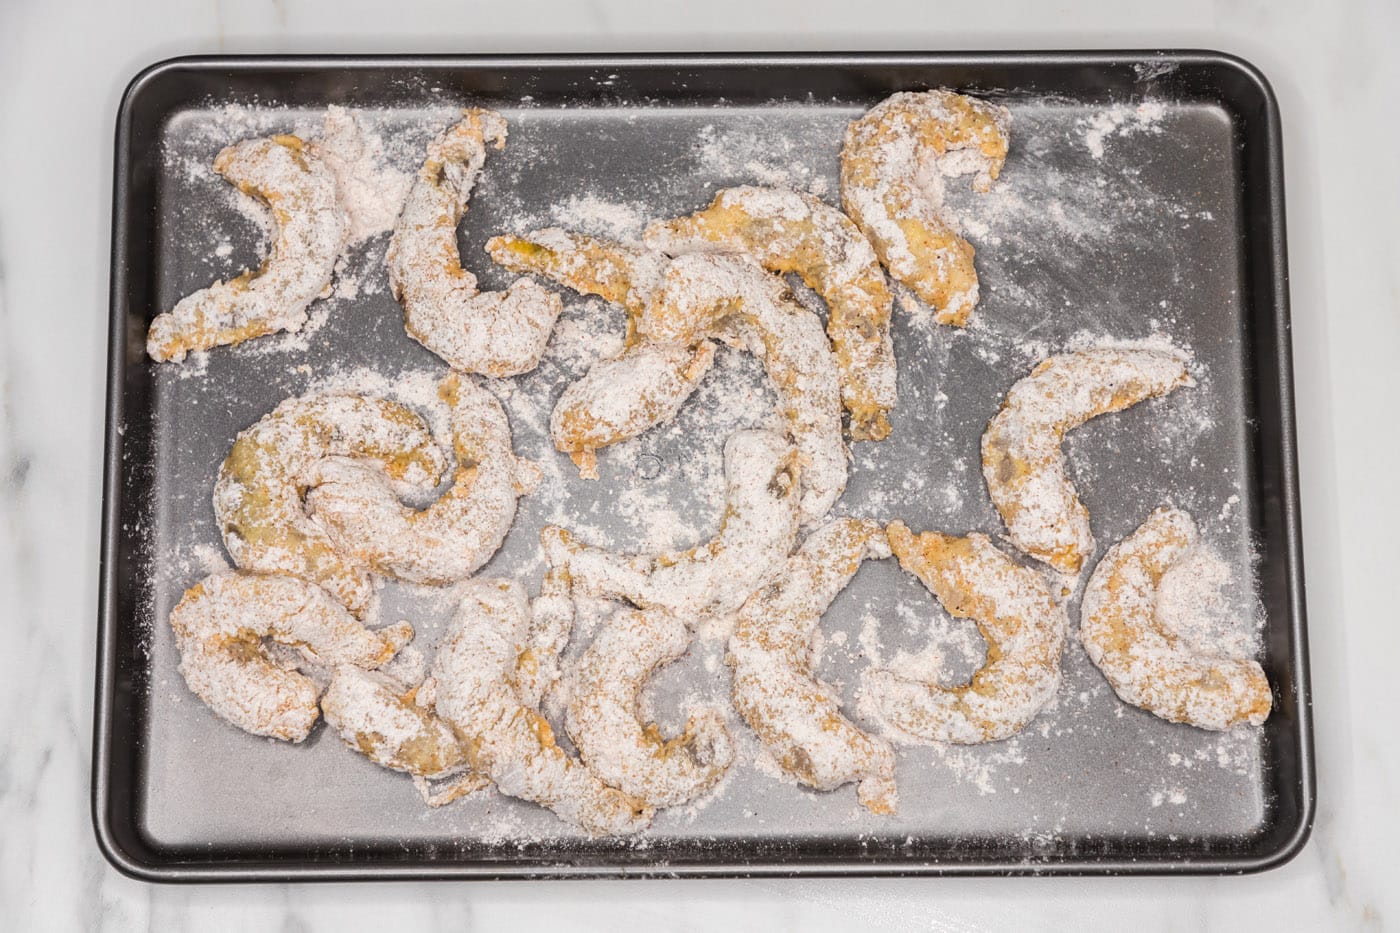 flour dredged shrimp on a baking sheet